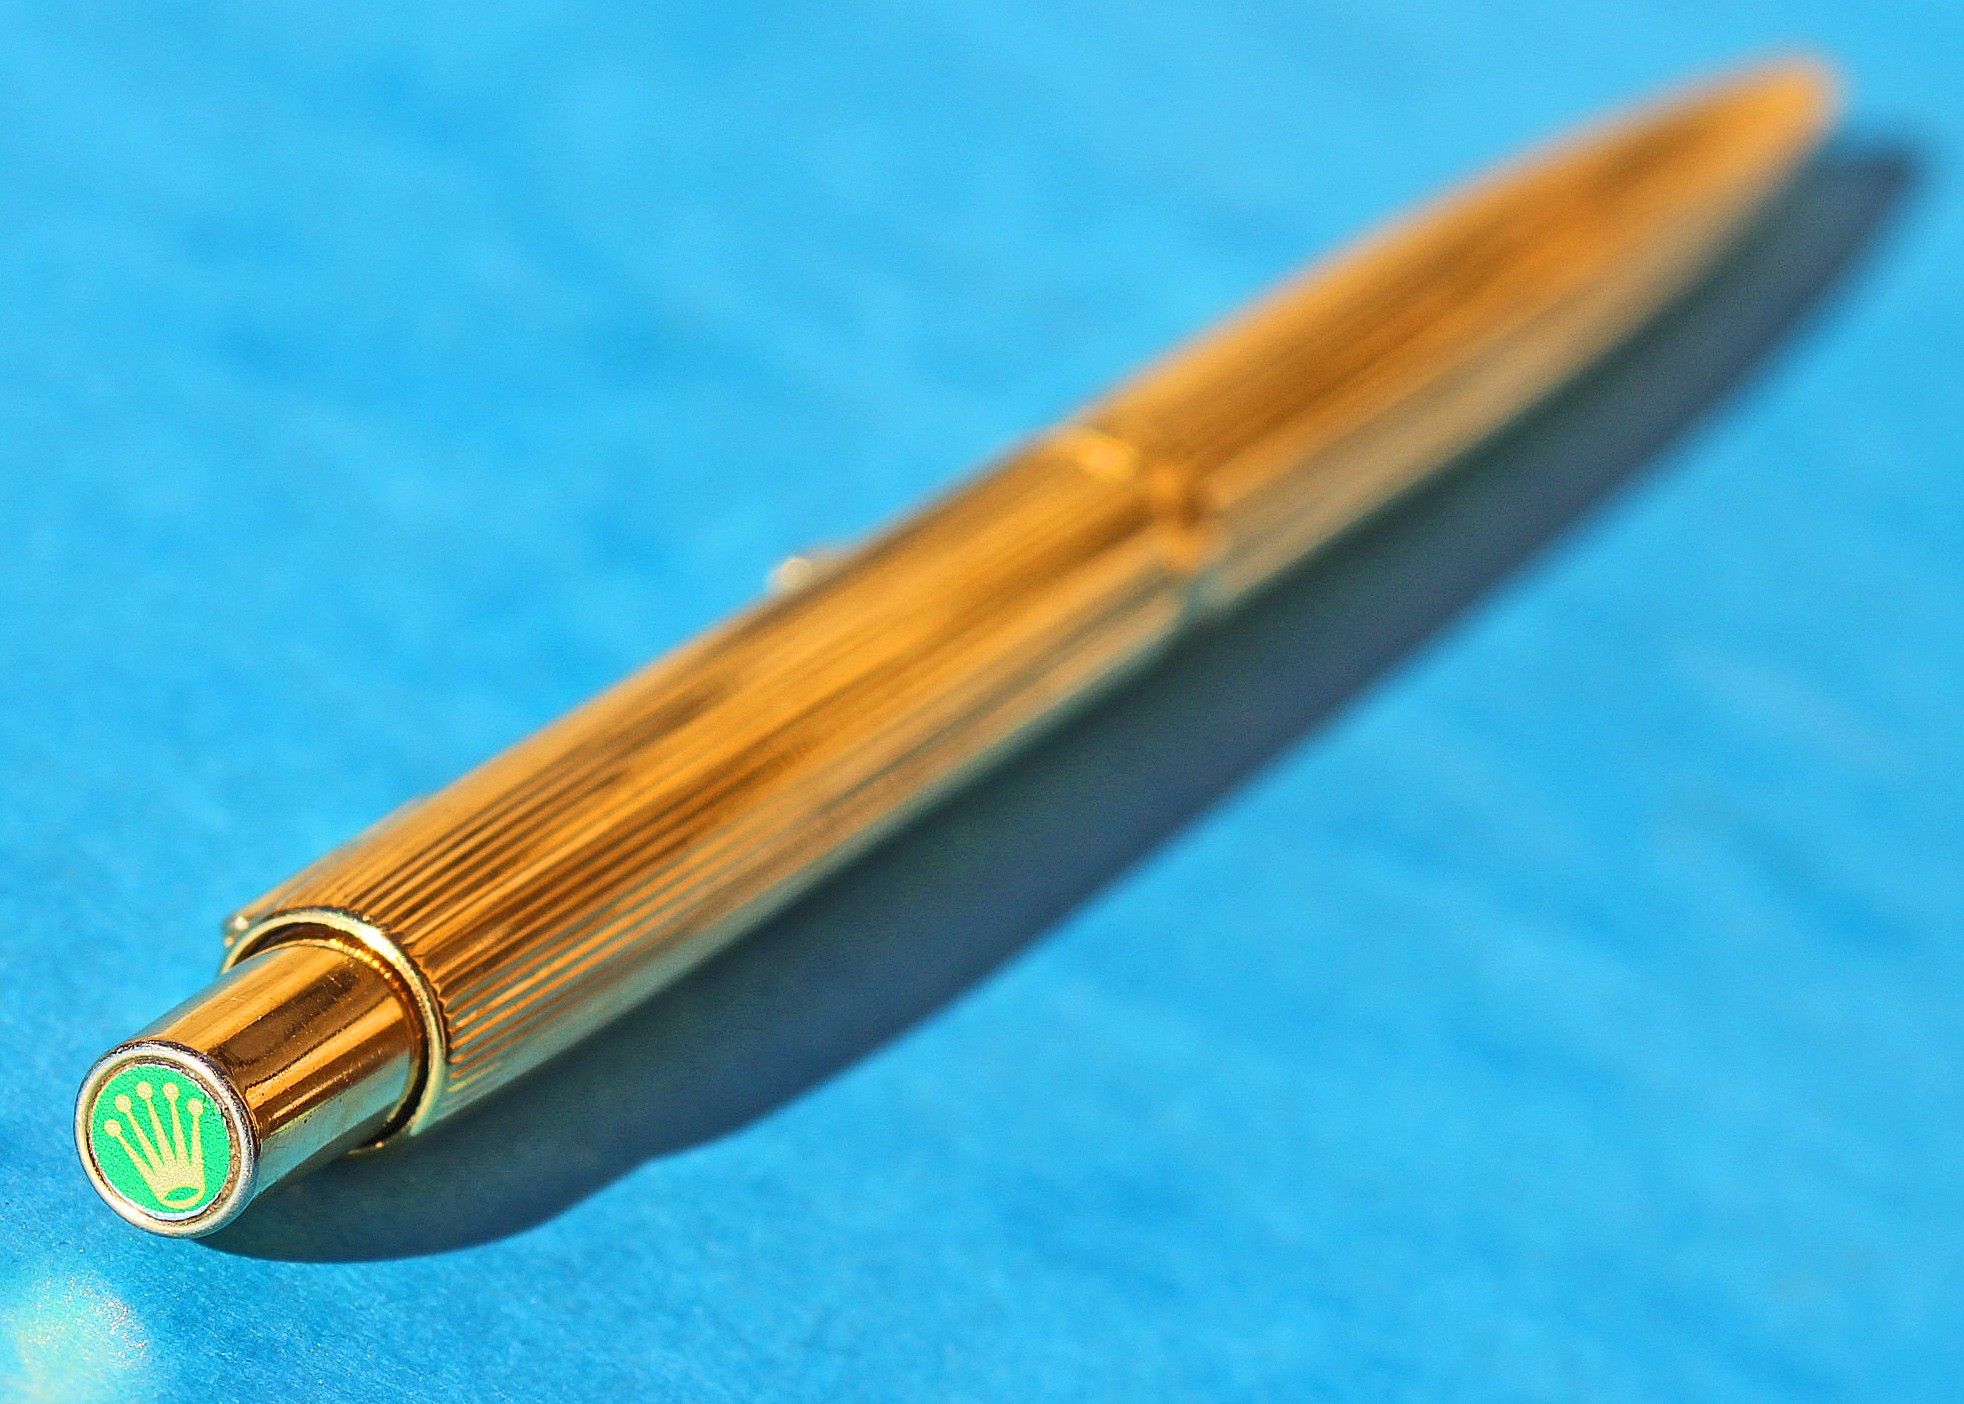 rolex gold pen